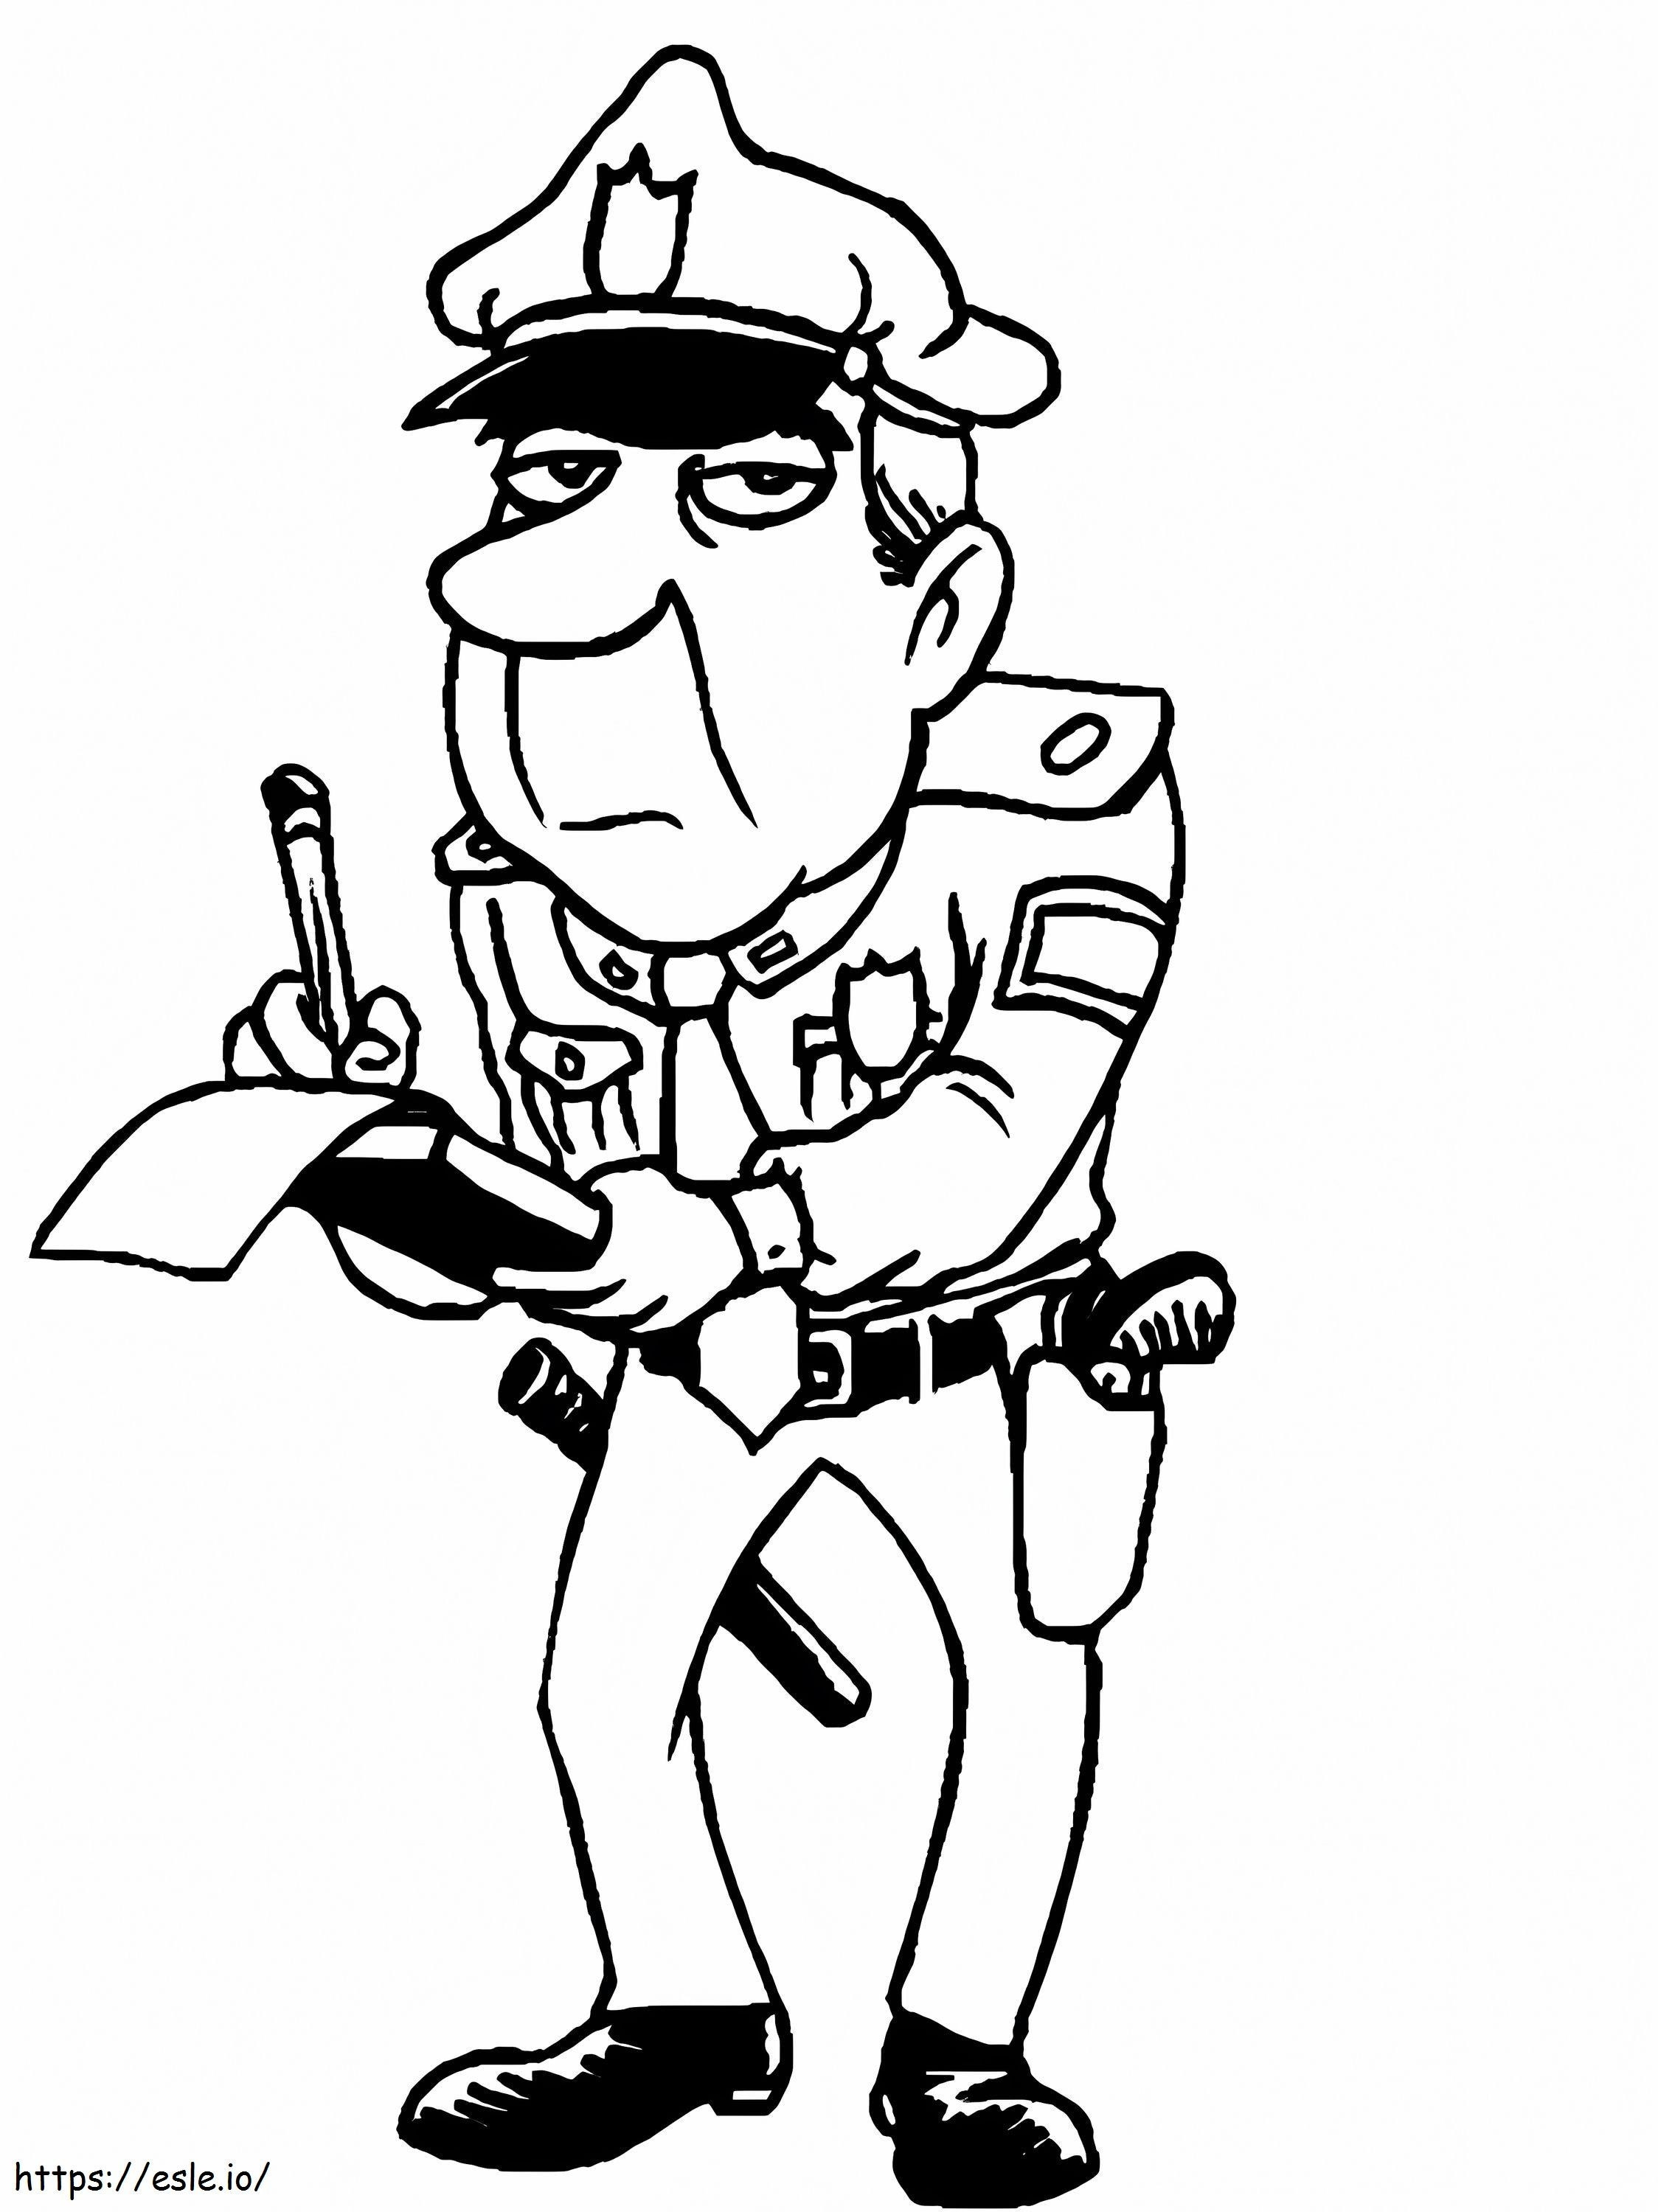 Escrita policial engraçada para colorir